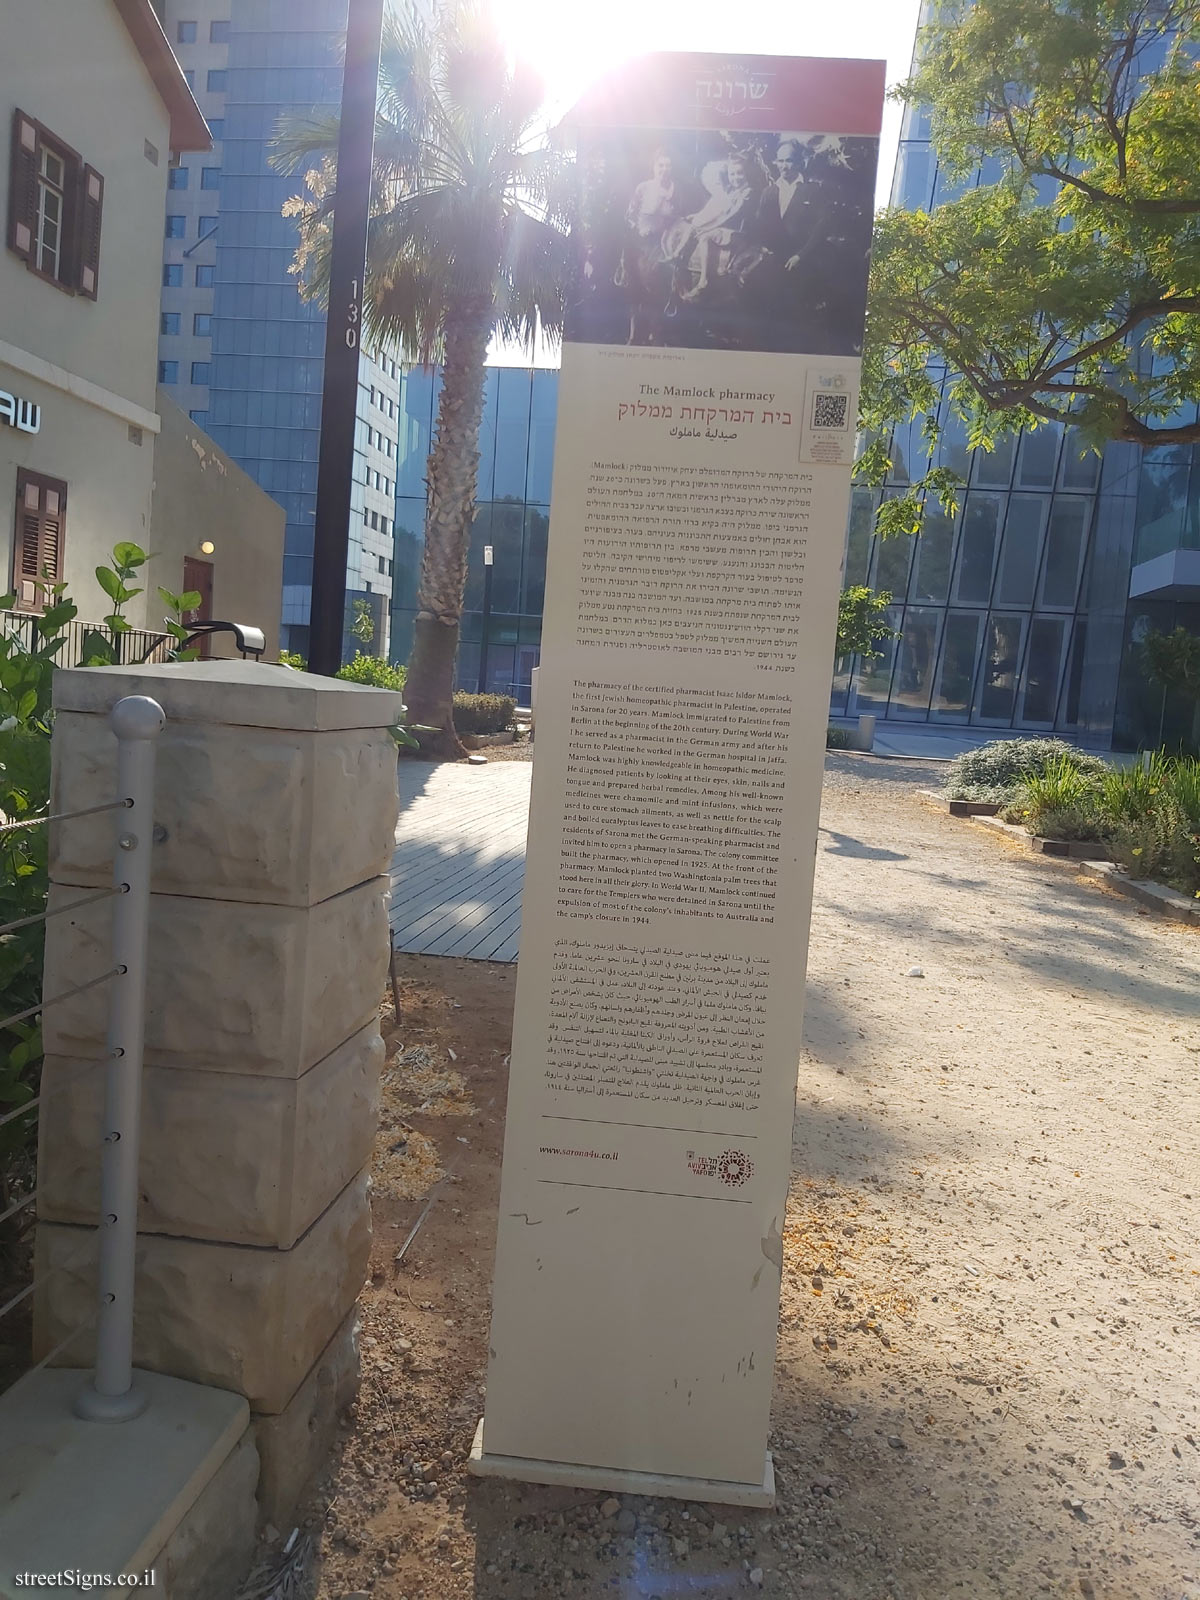 Tel Aviv - Sarona Complex - The Mamlock pharmacy